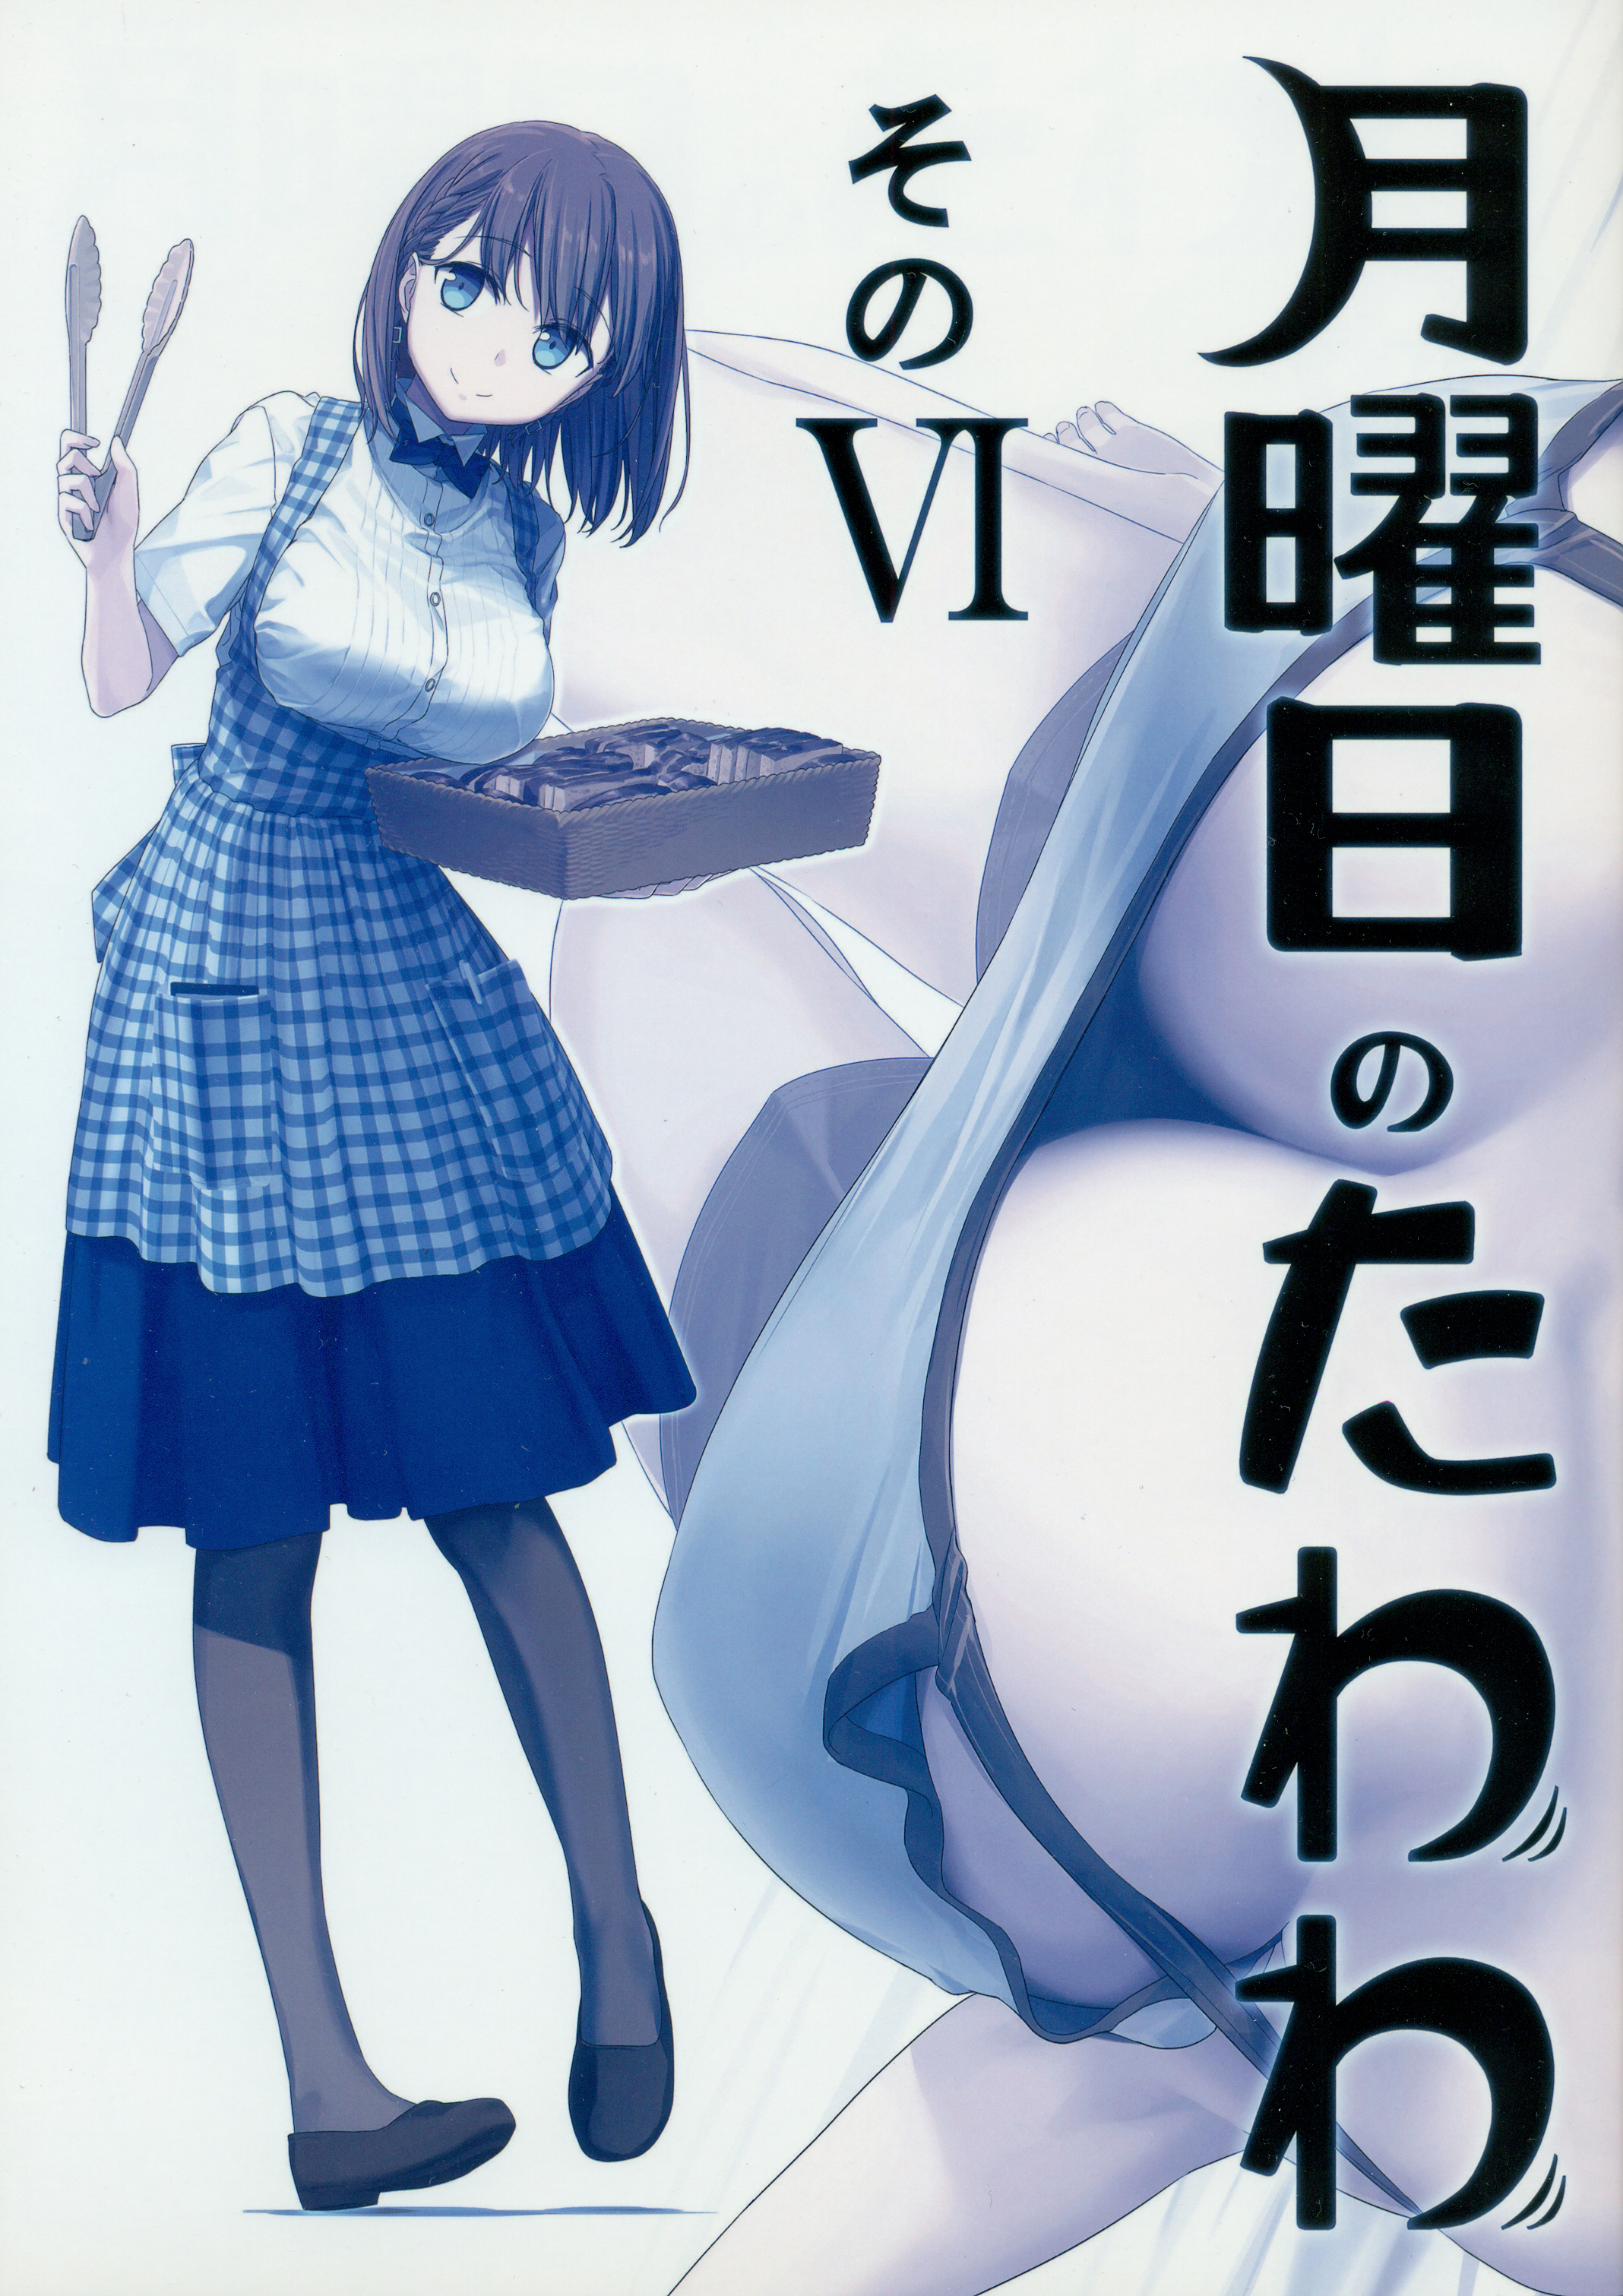 Getsuyoubi no Tawawa (Serialization) (Blue) (Fan Colored) - MangaDex